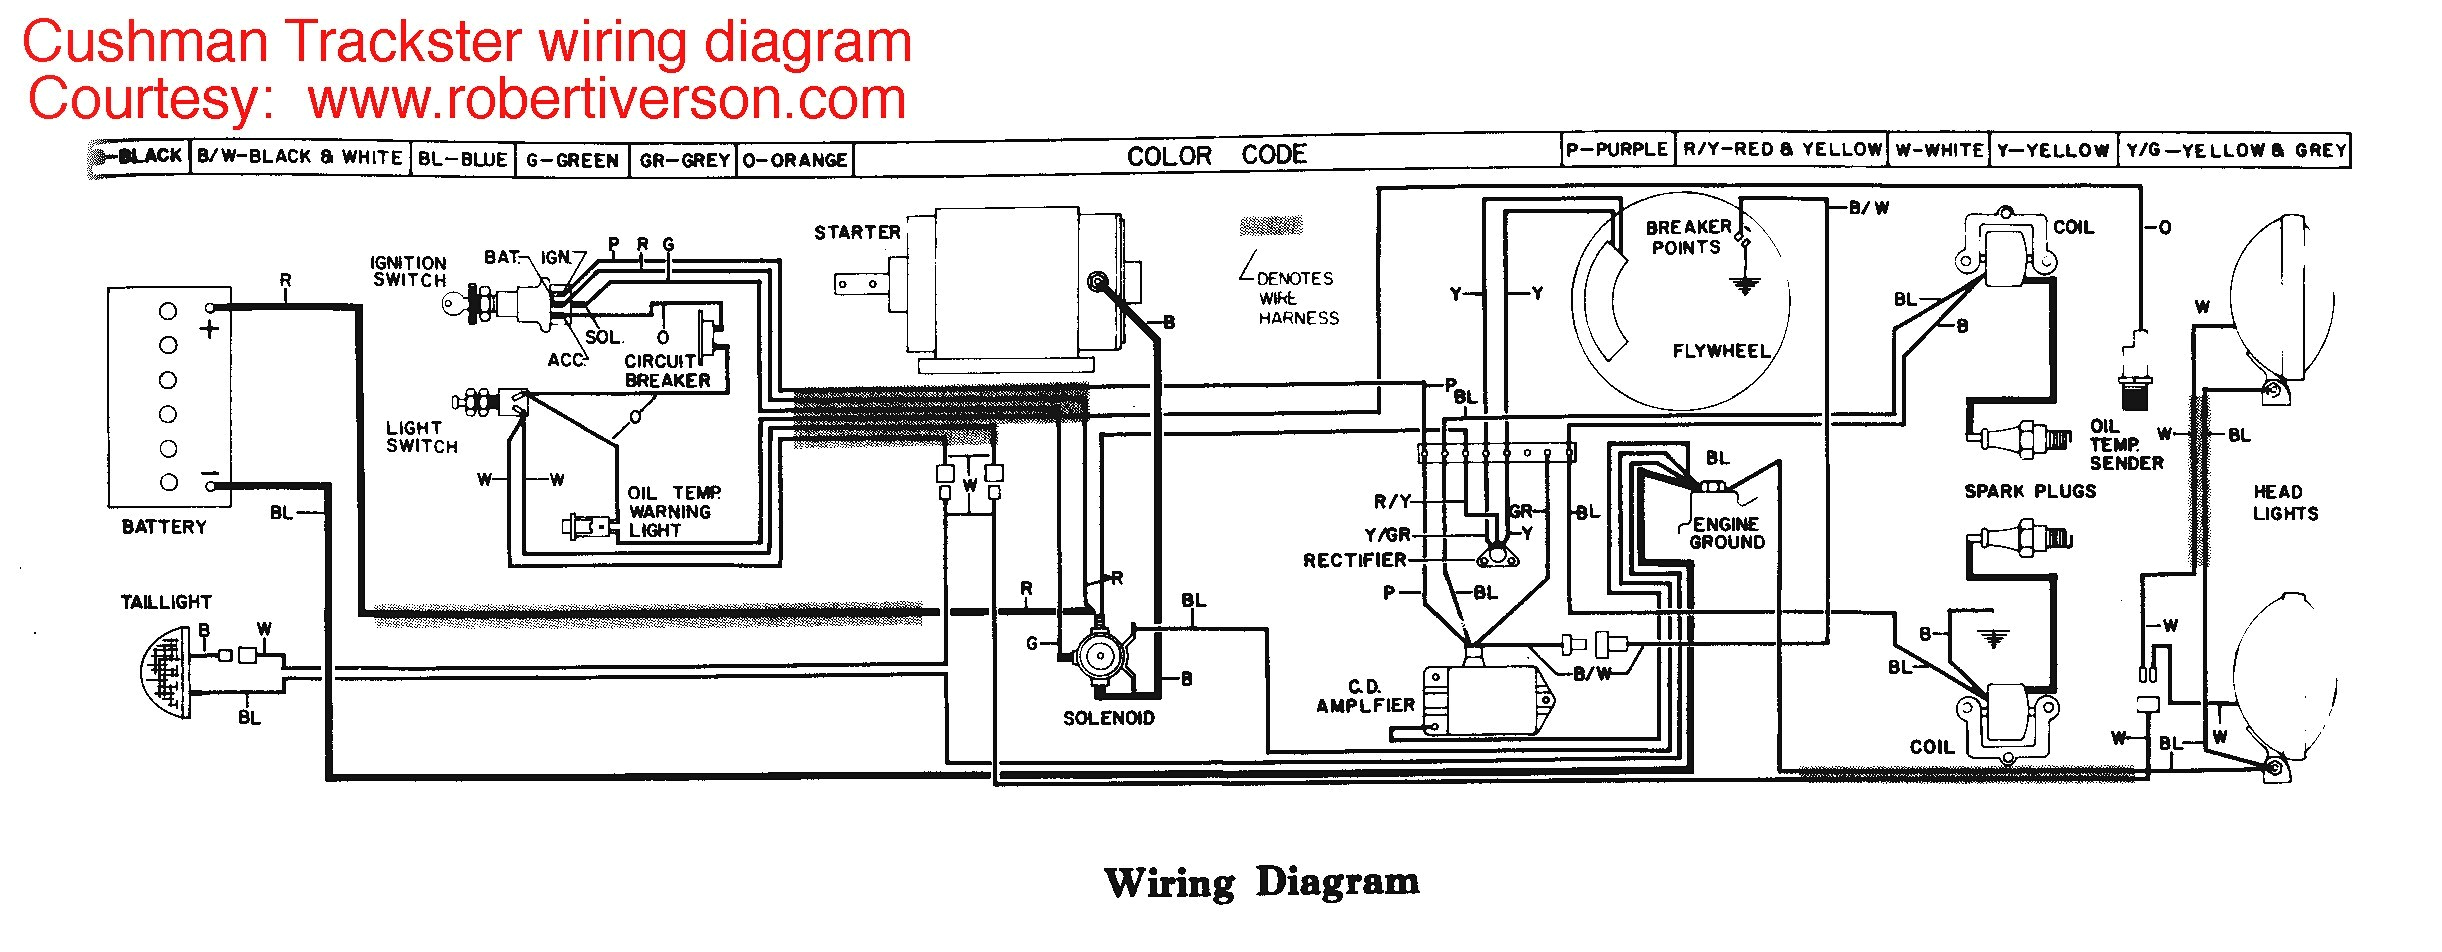 golf cart wiring diagram new cushman wiring diagram awesome wiring diagram od rv park photos of golf cart wiring diagram jpg